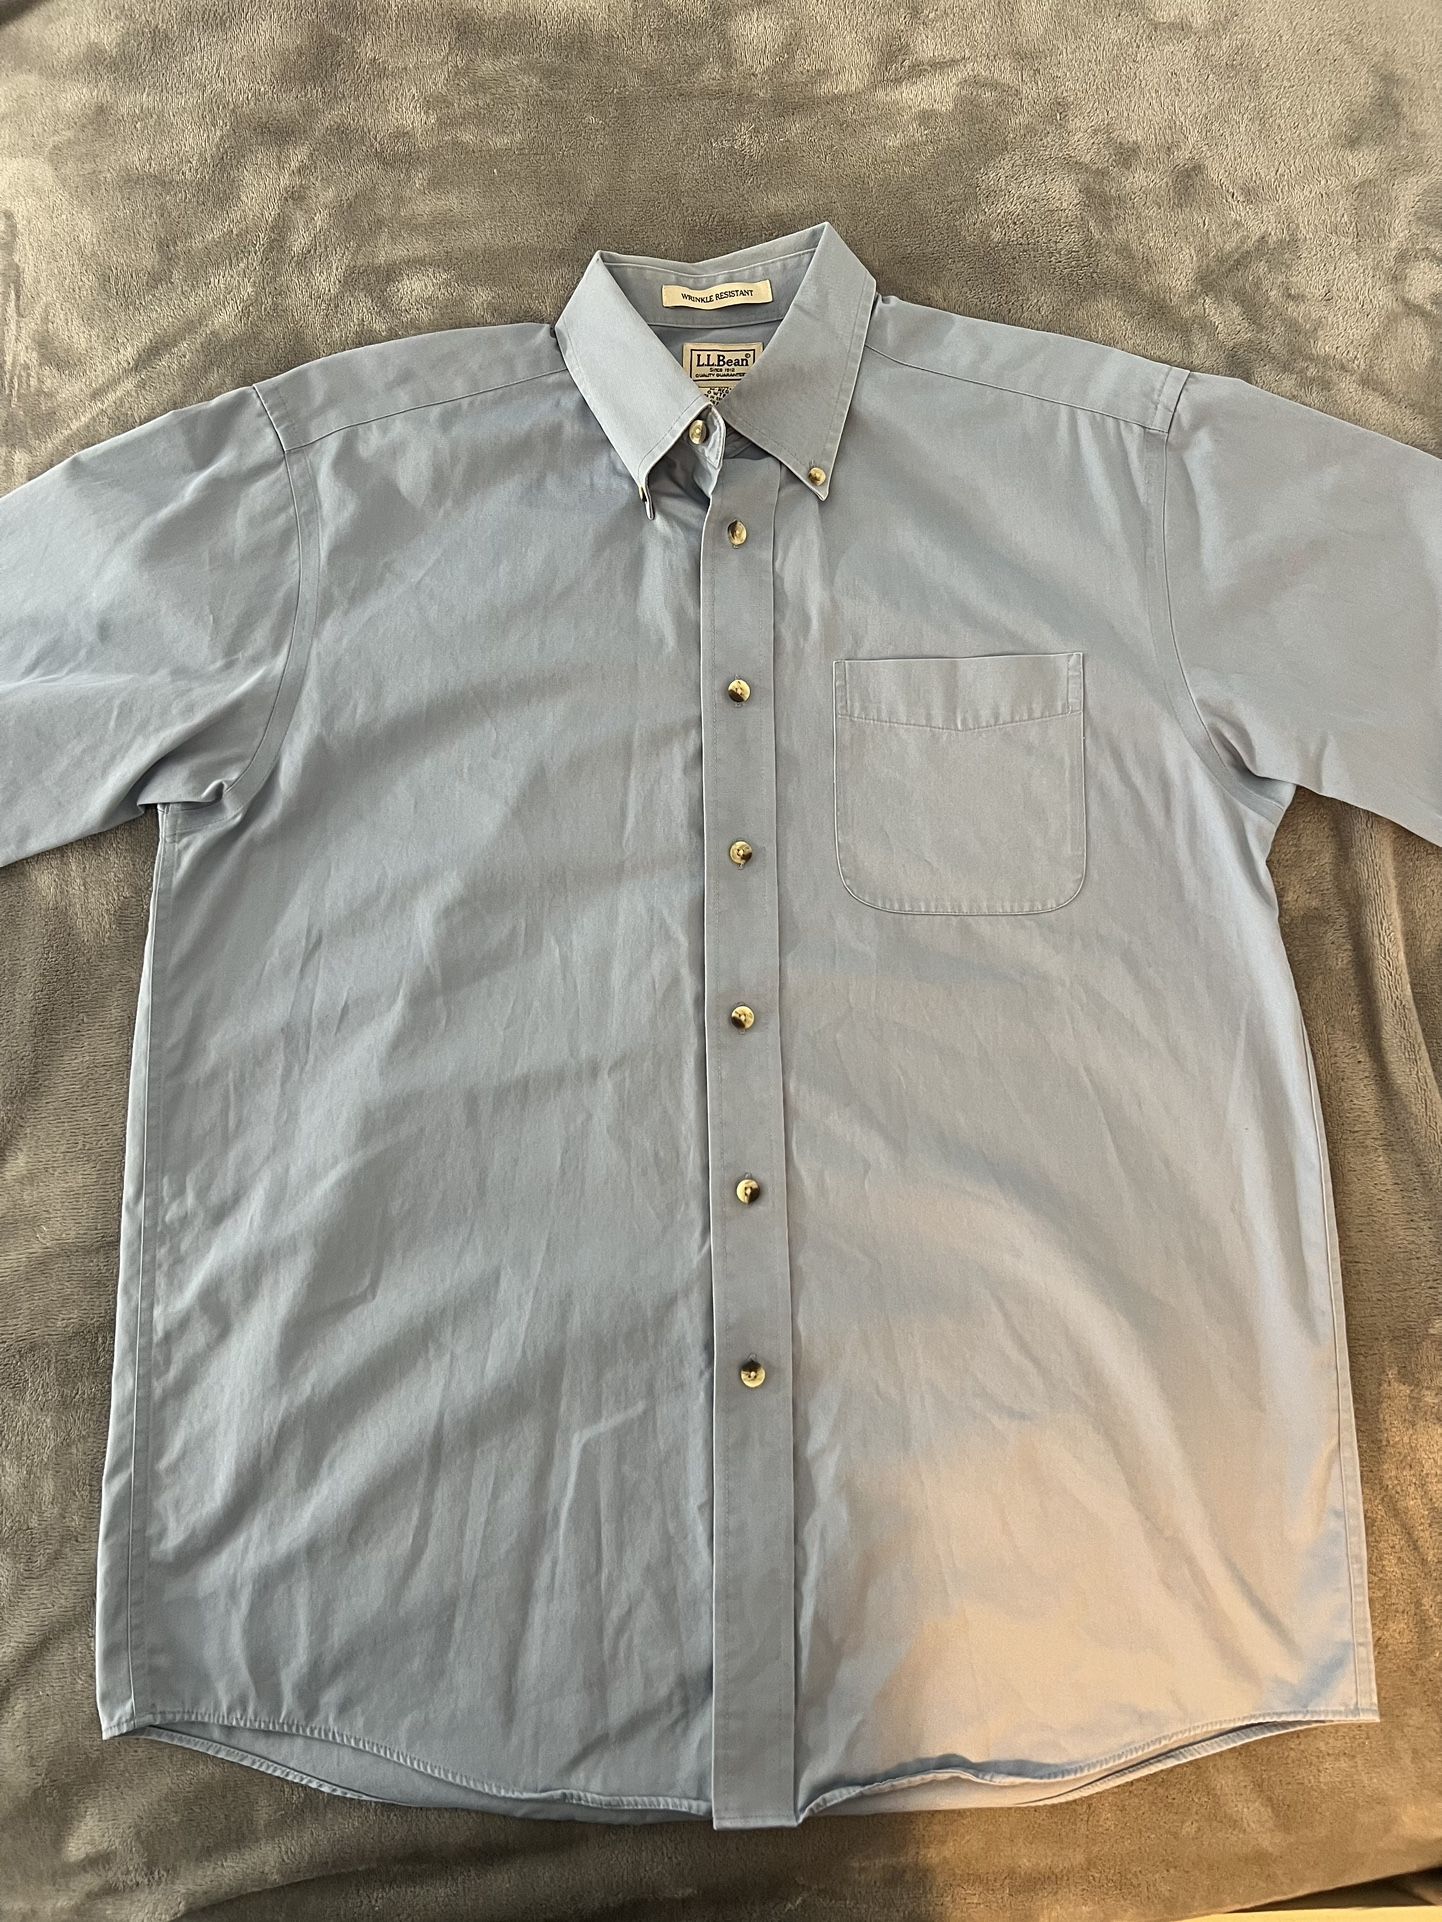 LL Bean Short Sleeve Shirt Men’s Medium Cotton Casual 